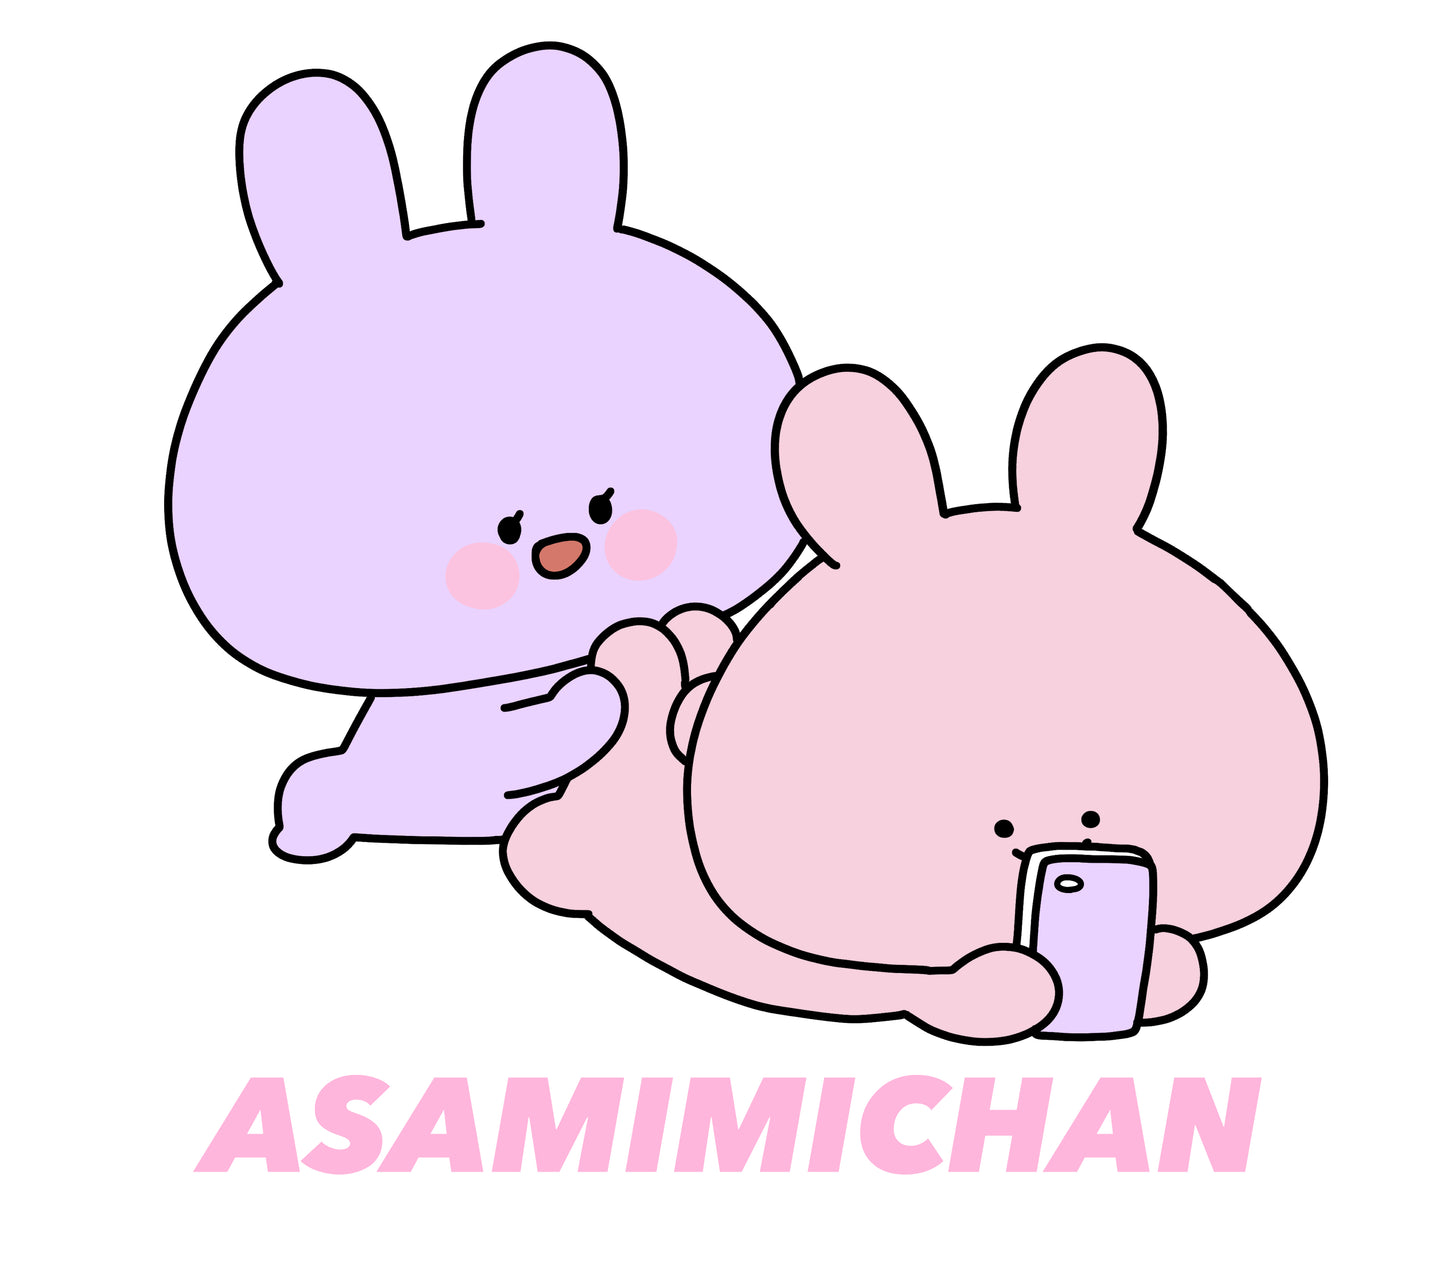 [Asamimi-chan] Camisole (Asamimi BASIC May) [Versand Mitte Juli]